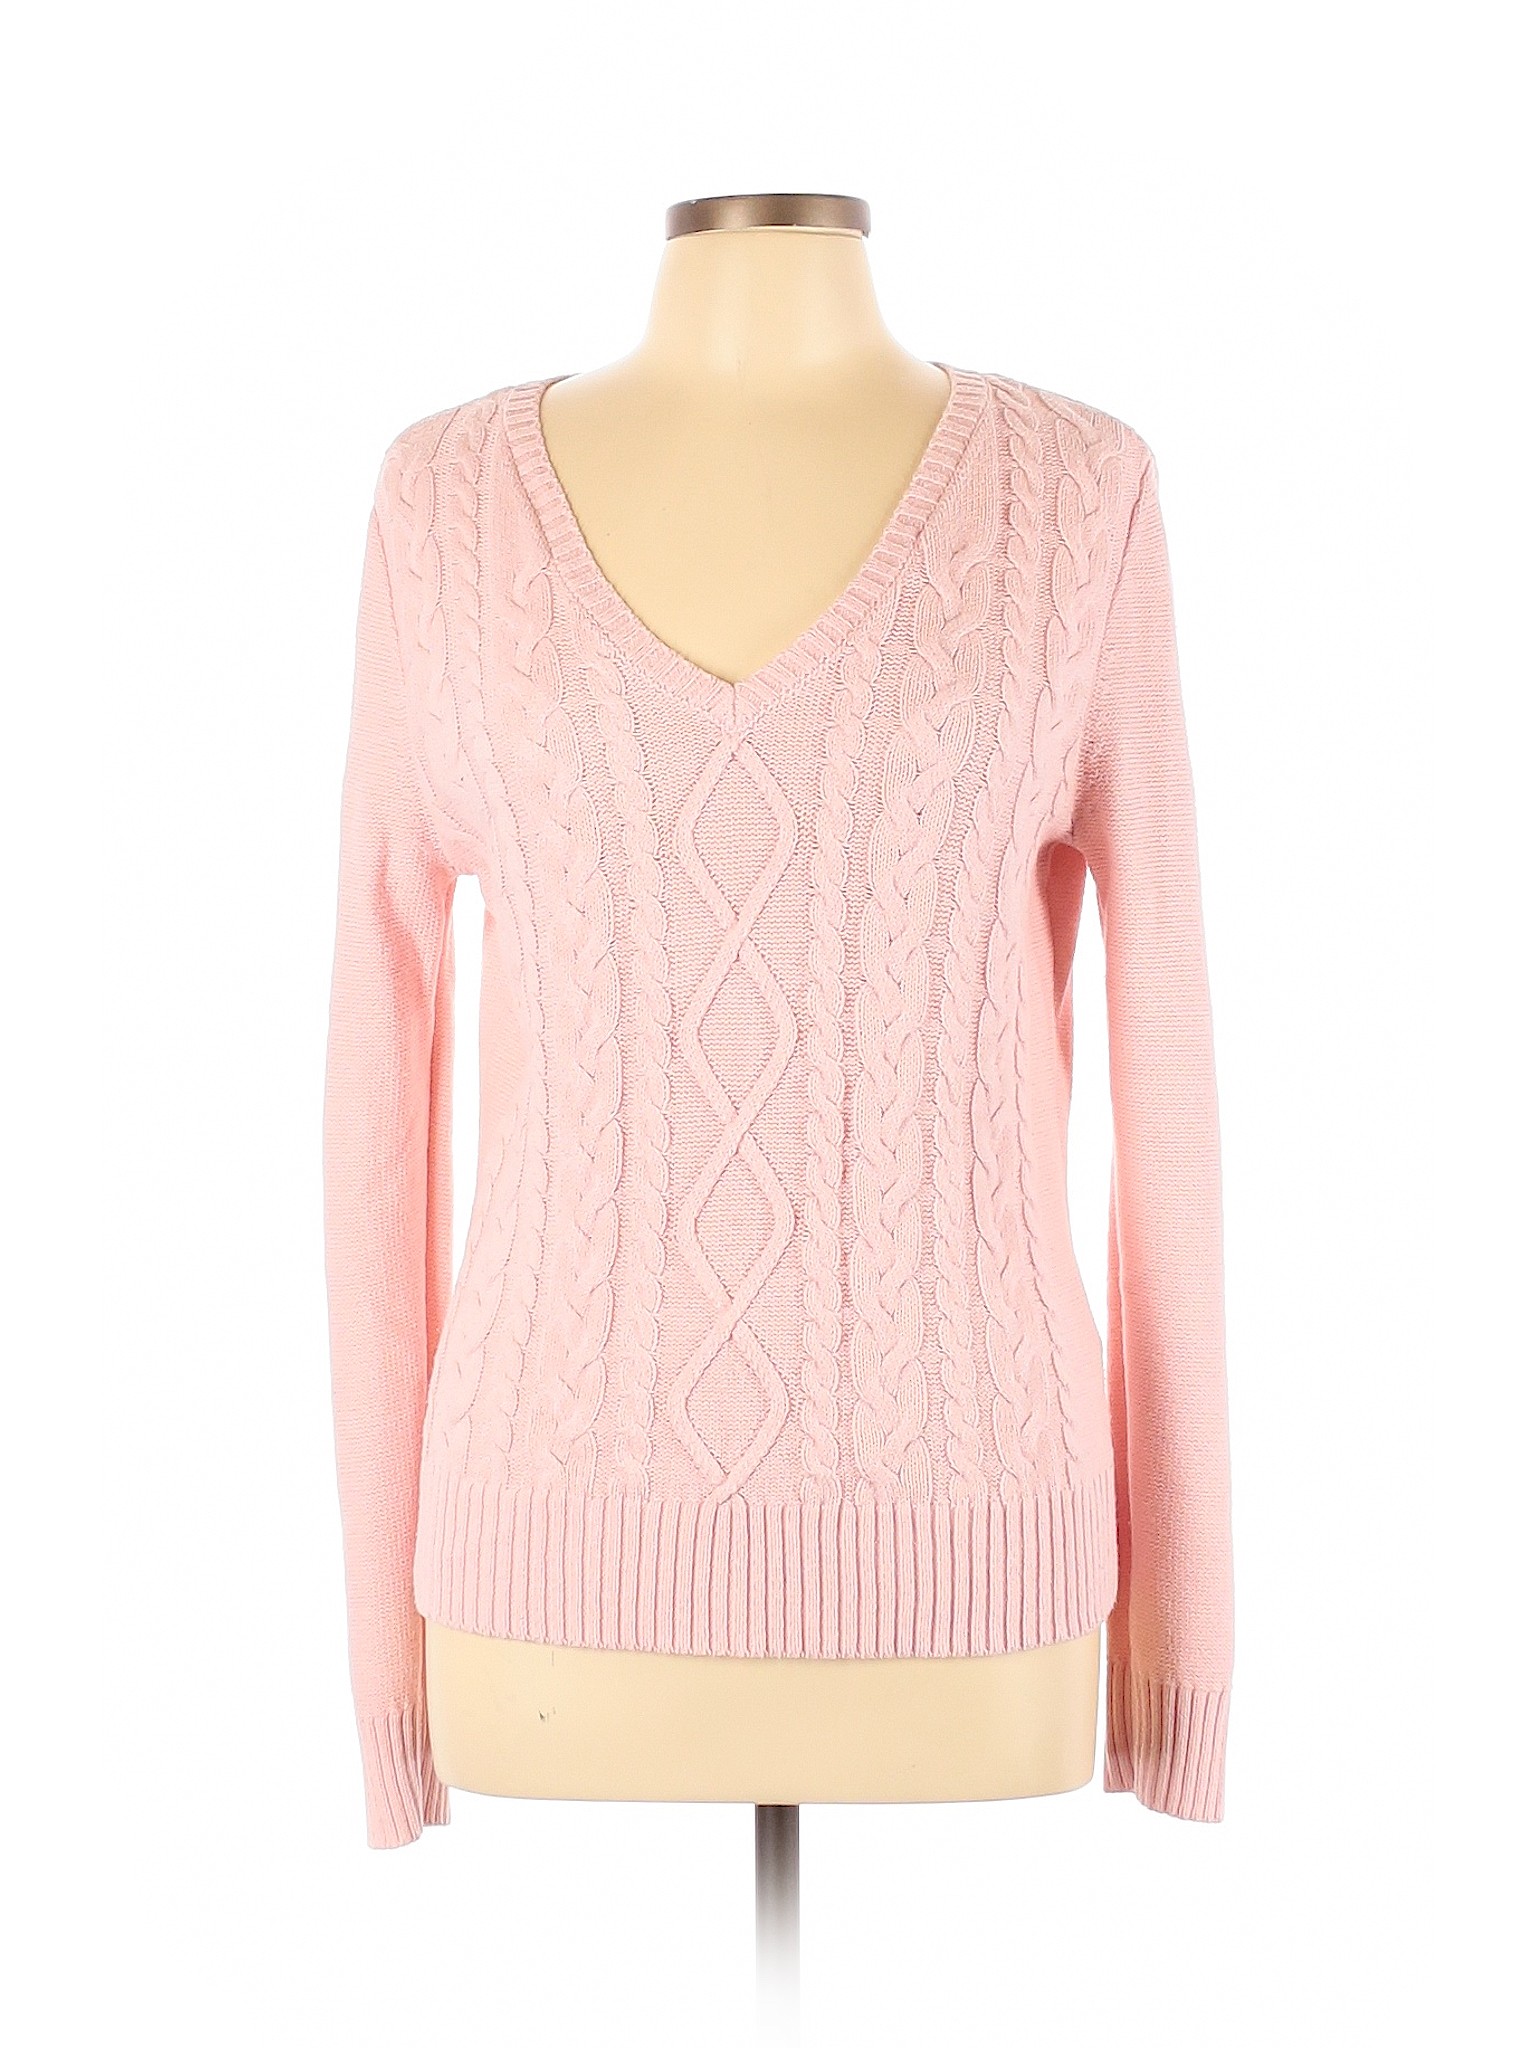 Chaps Women Pink Pullover Sweater L | eBay